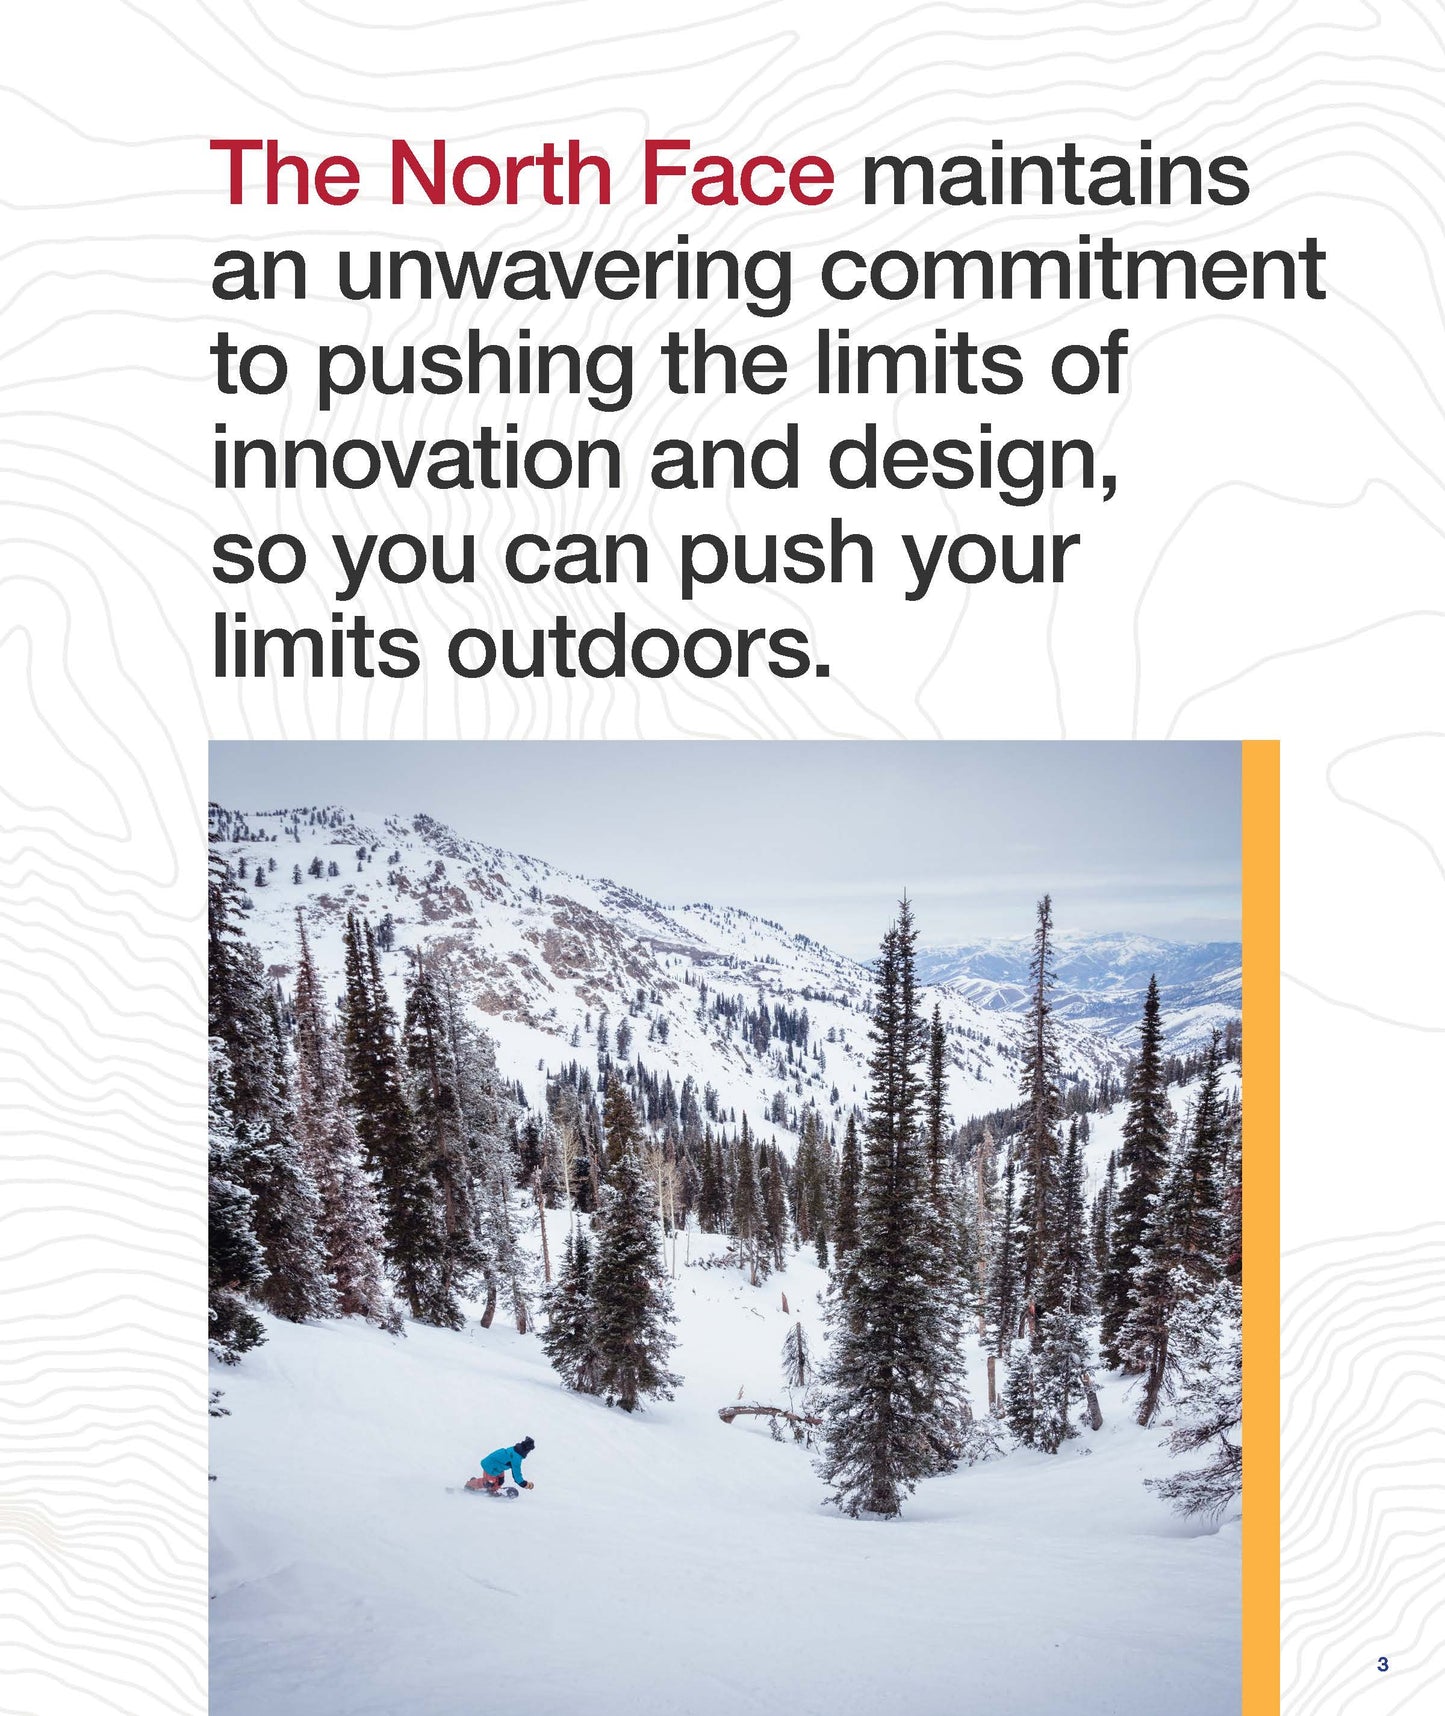 Digital Catalog - The North Face 2024